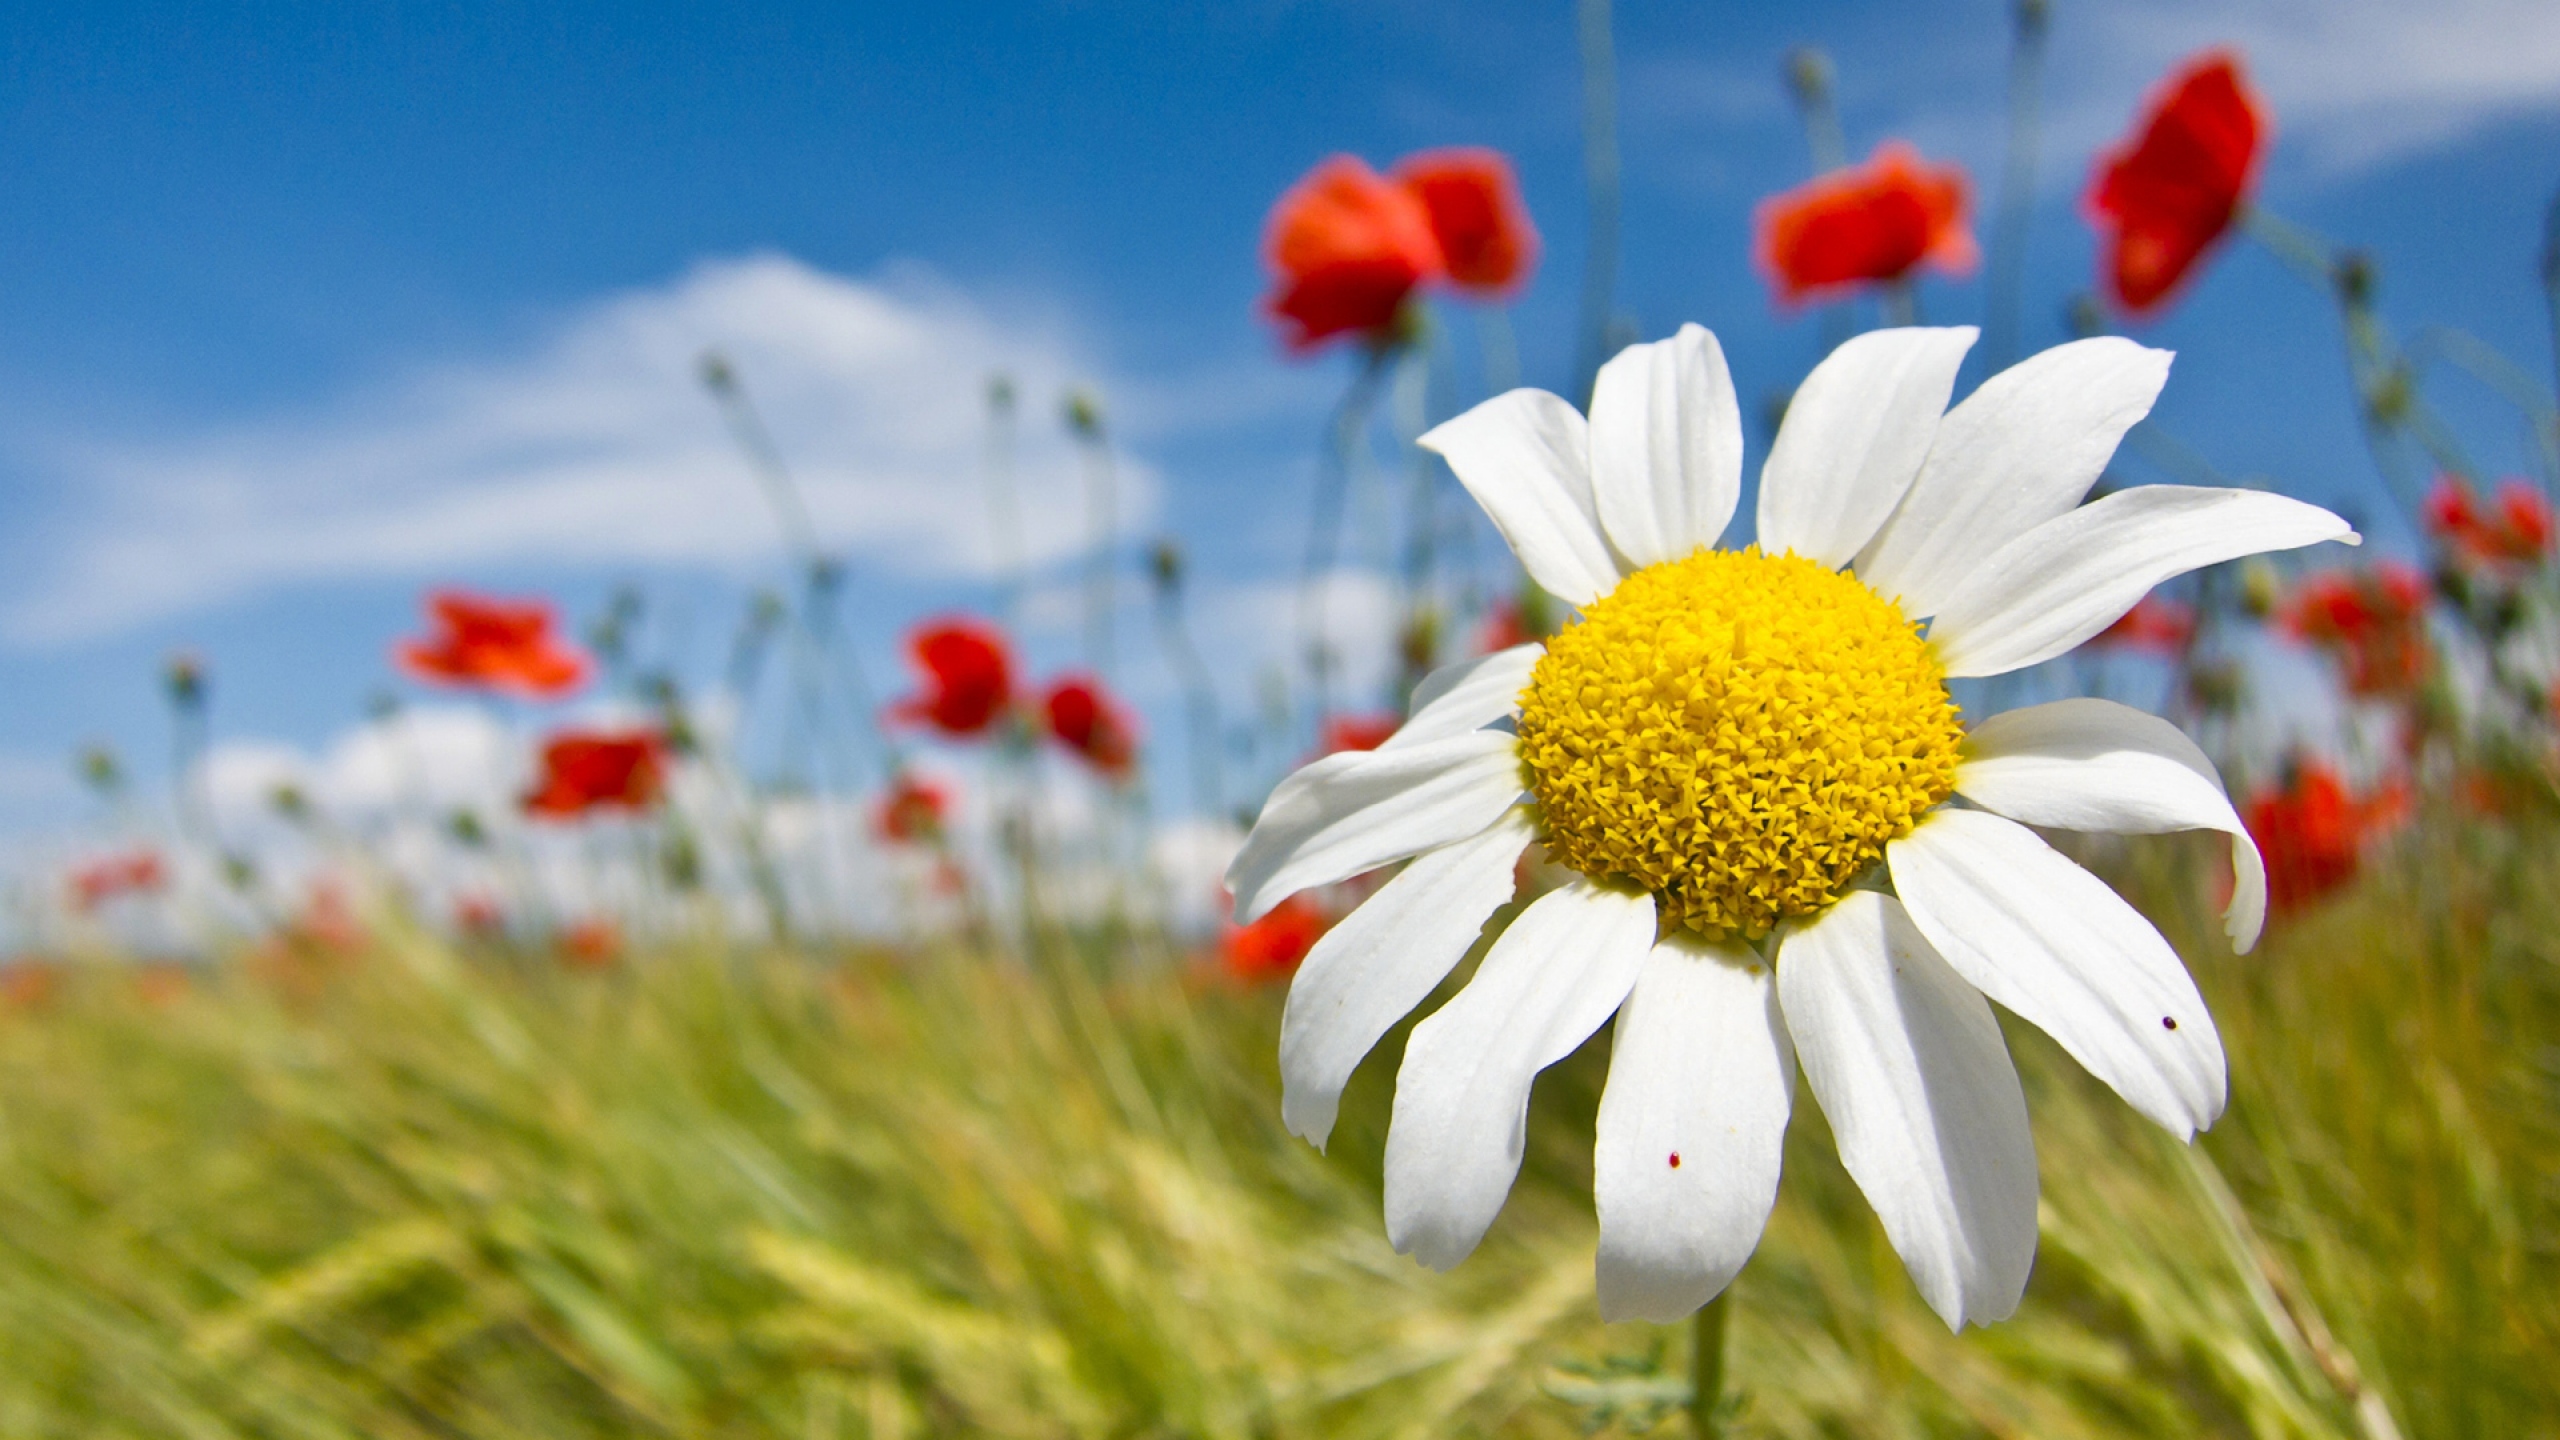 Download Wallpaper 2560x1440 Daisy, Flowers, Field, Summer, Sky ...